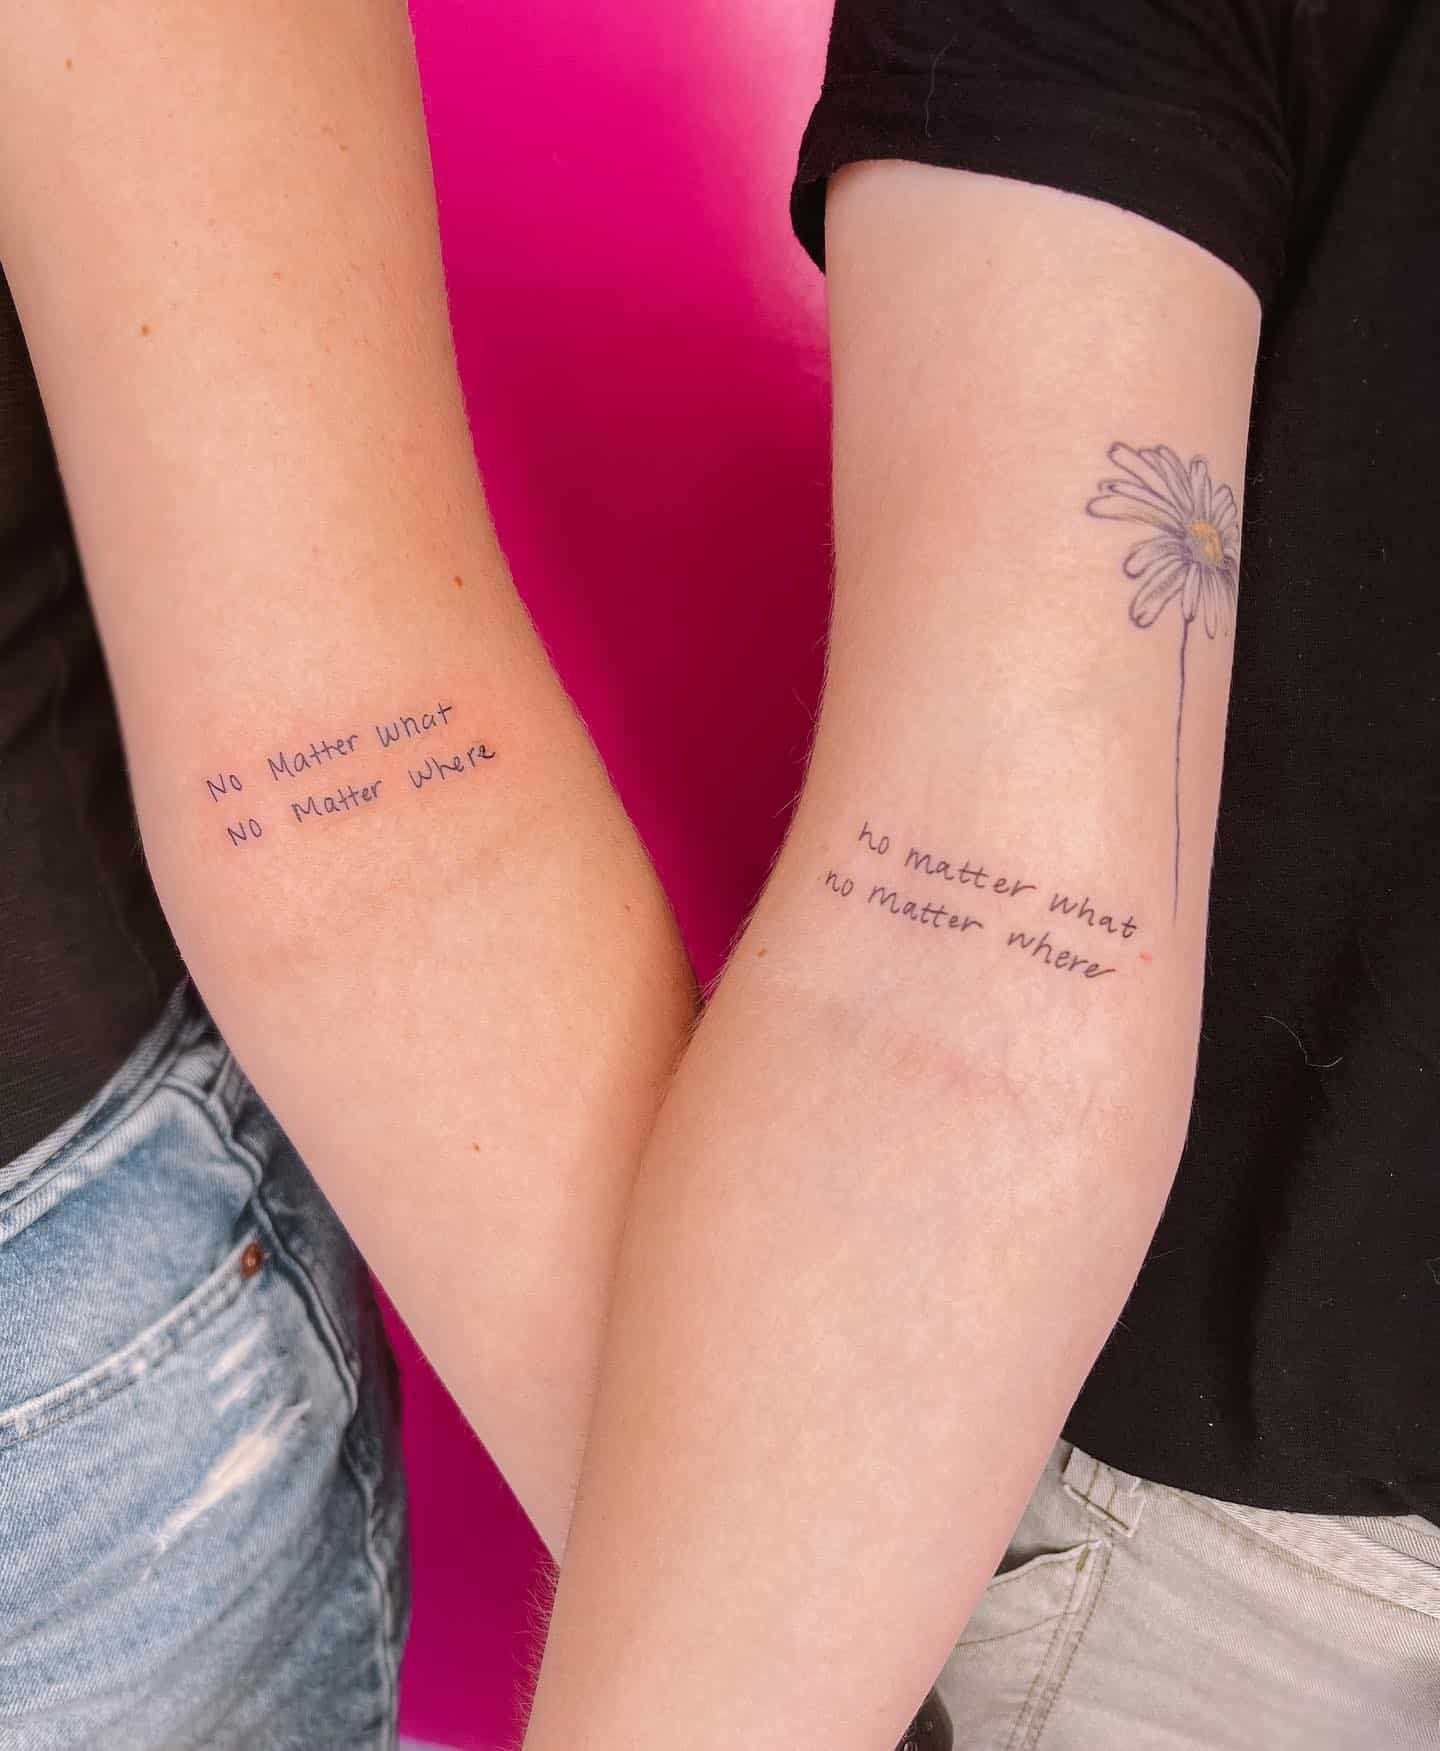 Tatuaggio frasi - Foto: Pinterest.it